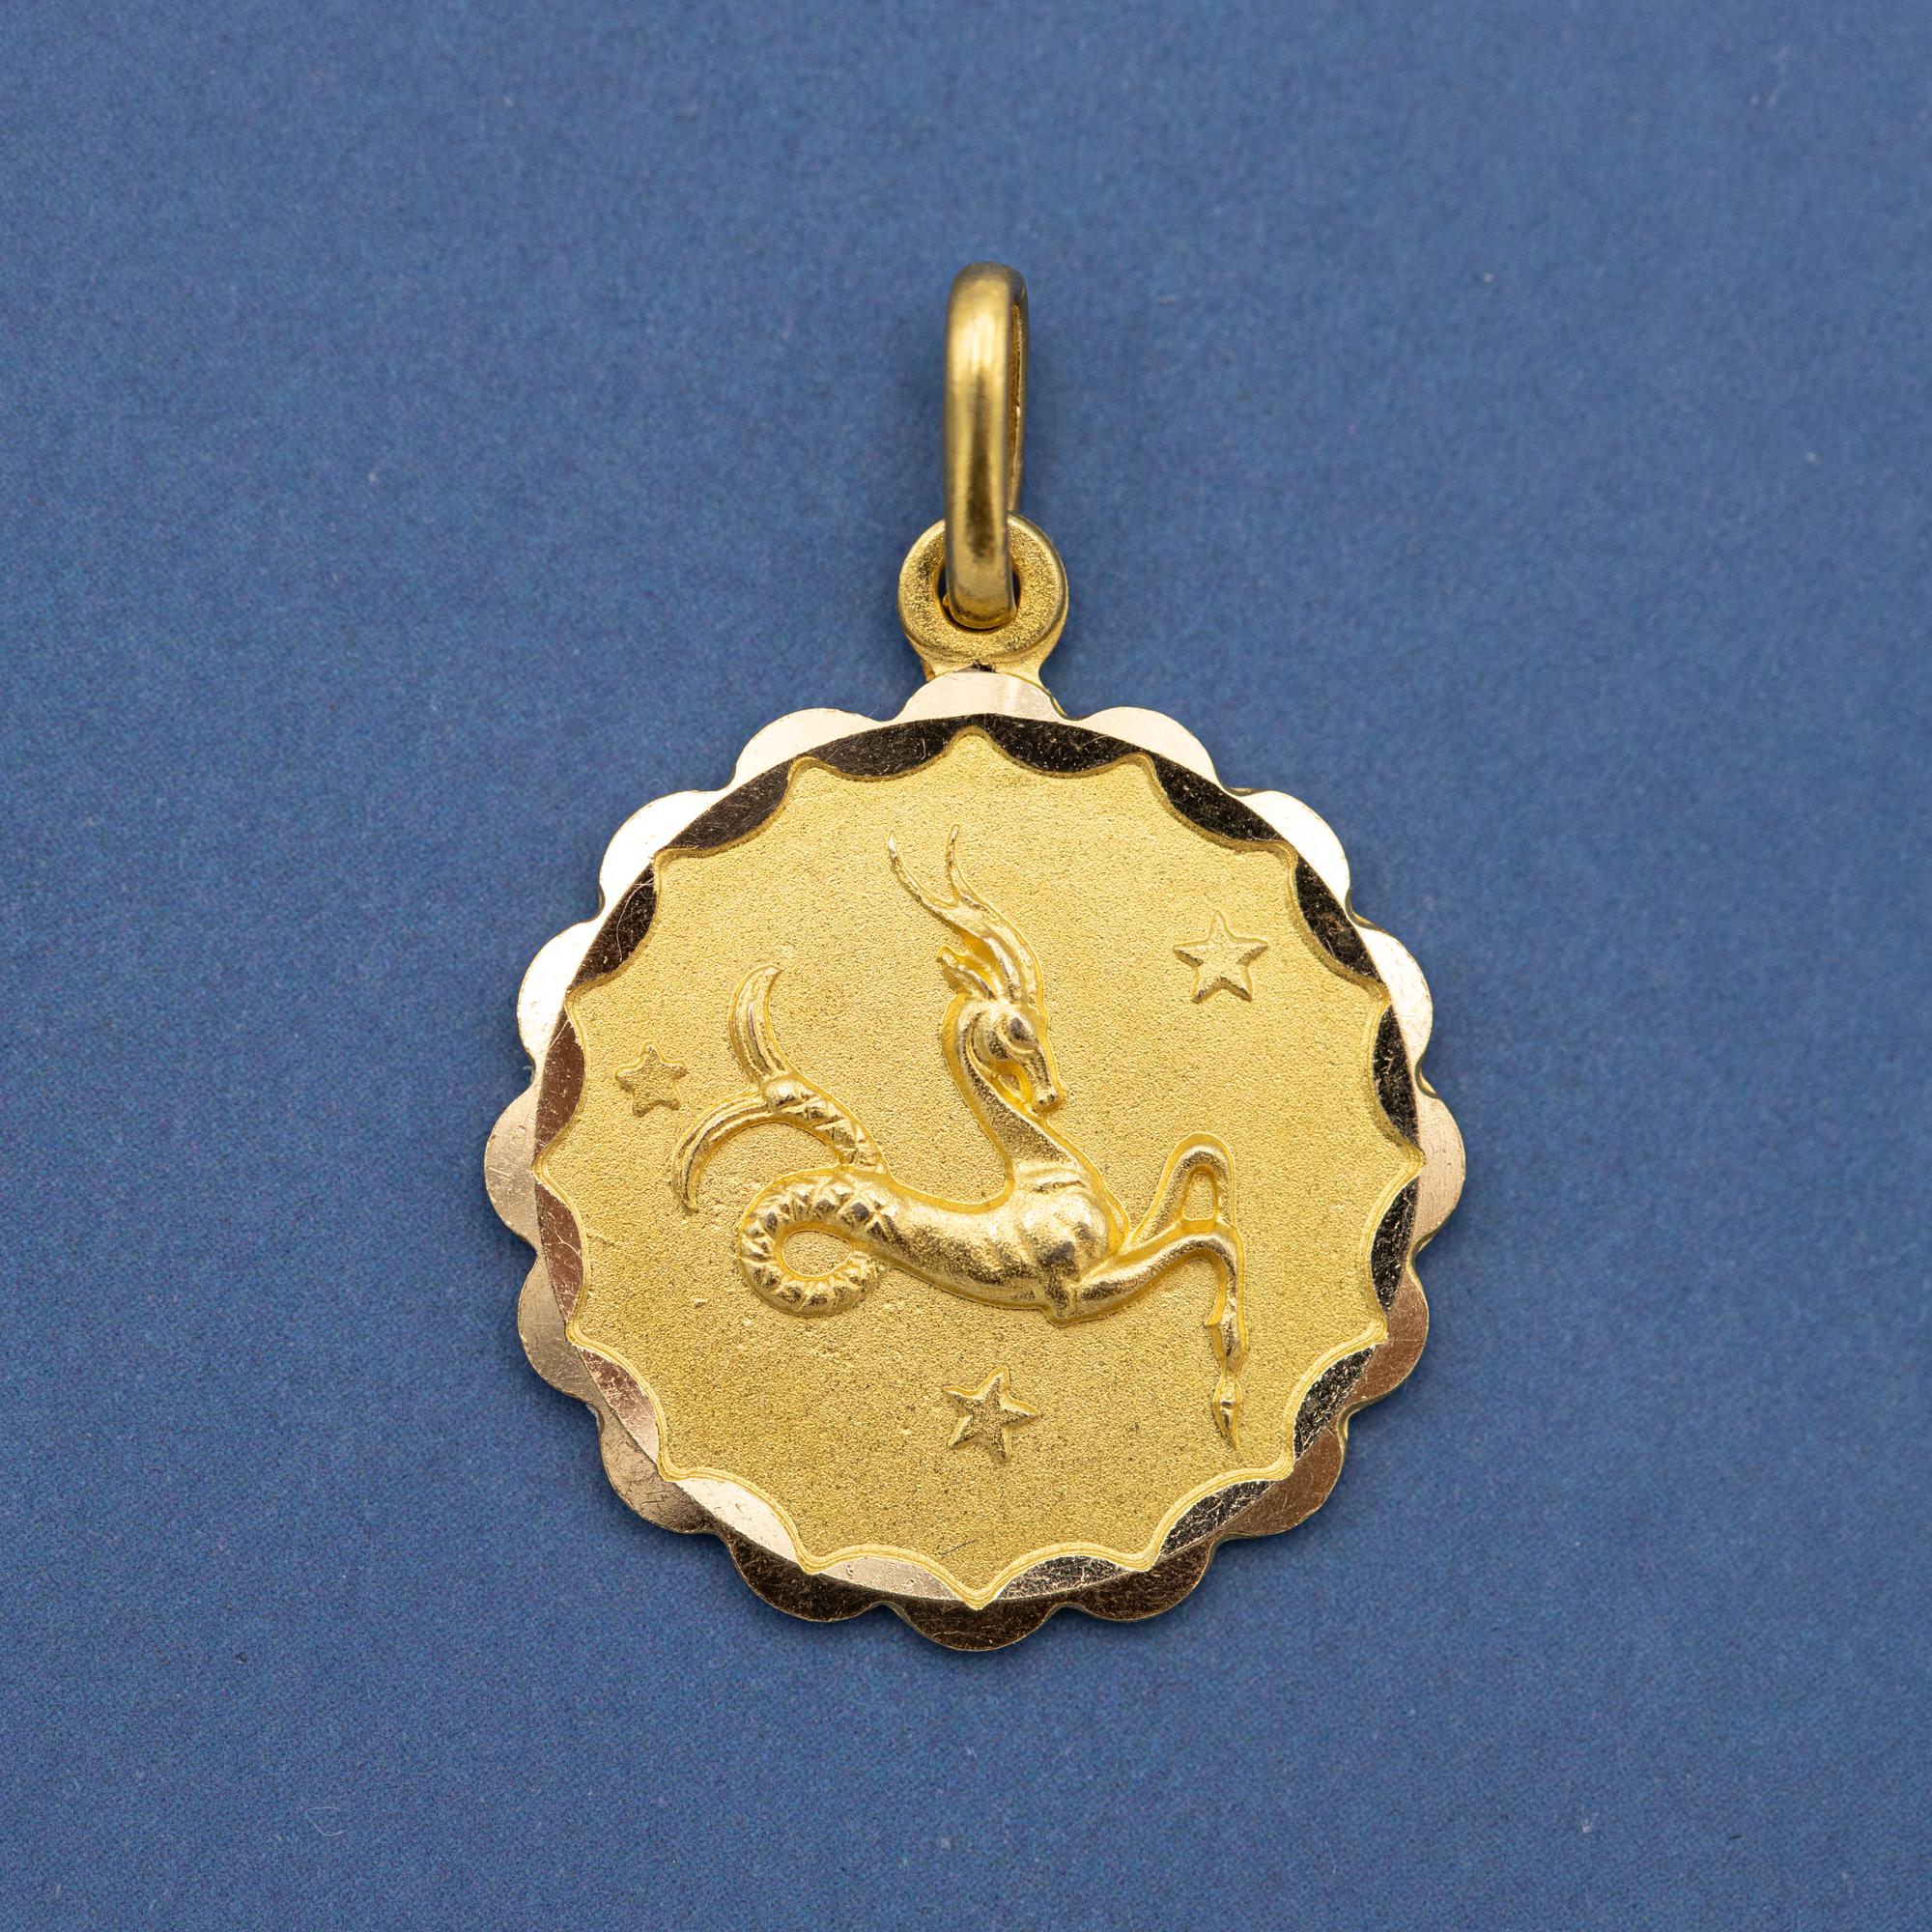 Vintage 18 k Italian zodiac charm pendant - Capricorn charm - solid yellow gold 1